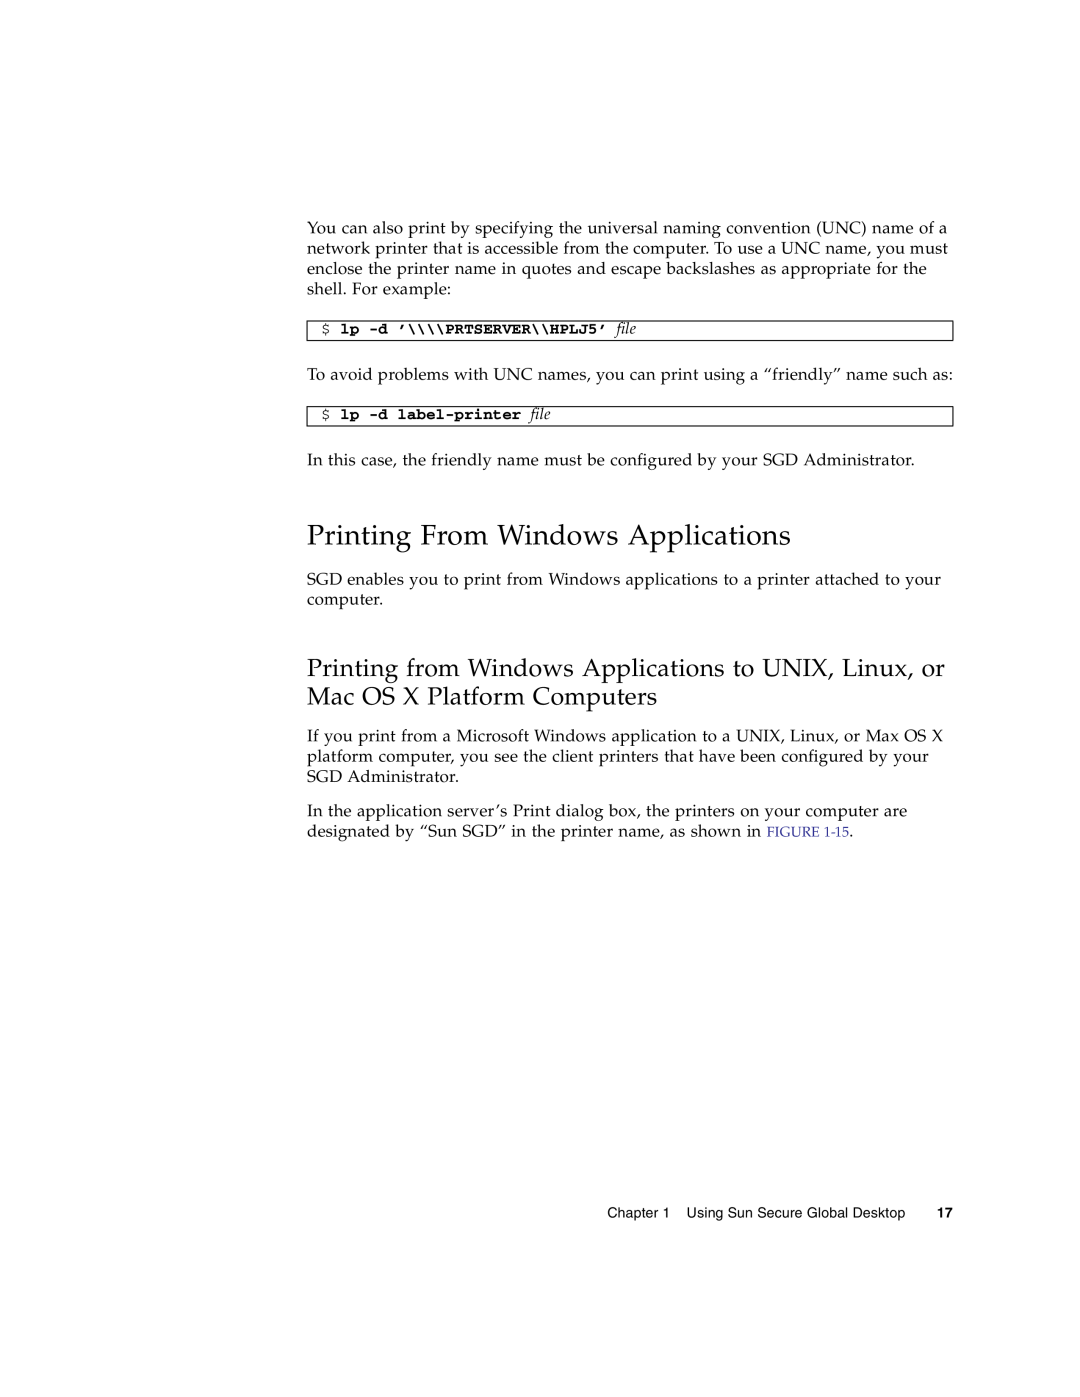 Sun Microsystems 4.5 Printing From Windows Applications, $ lp -d ’\\\\PRTSERVER\\HPLJ5’ file, $ lp -d label-printer file 